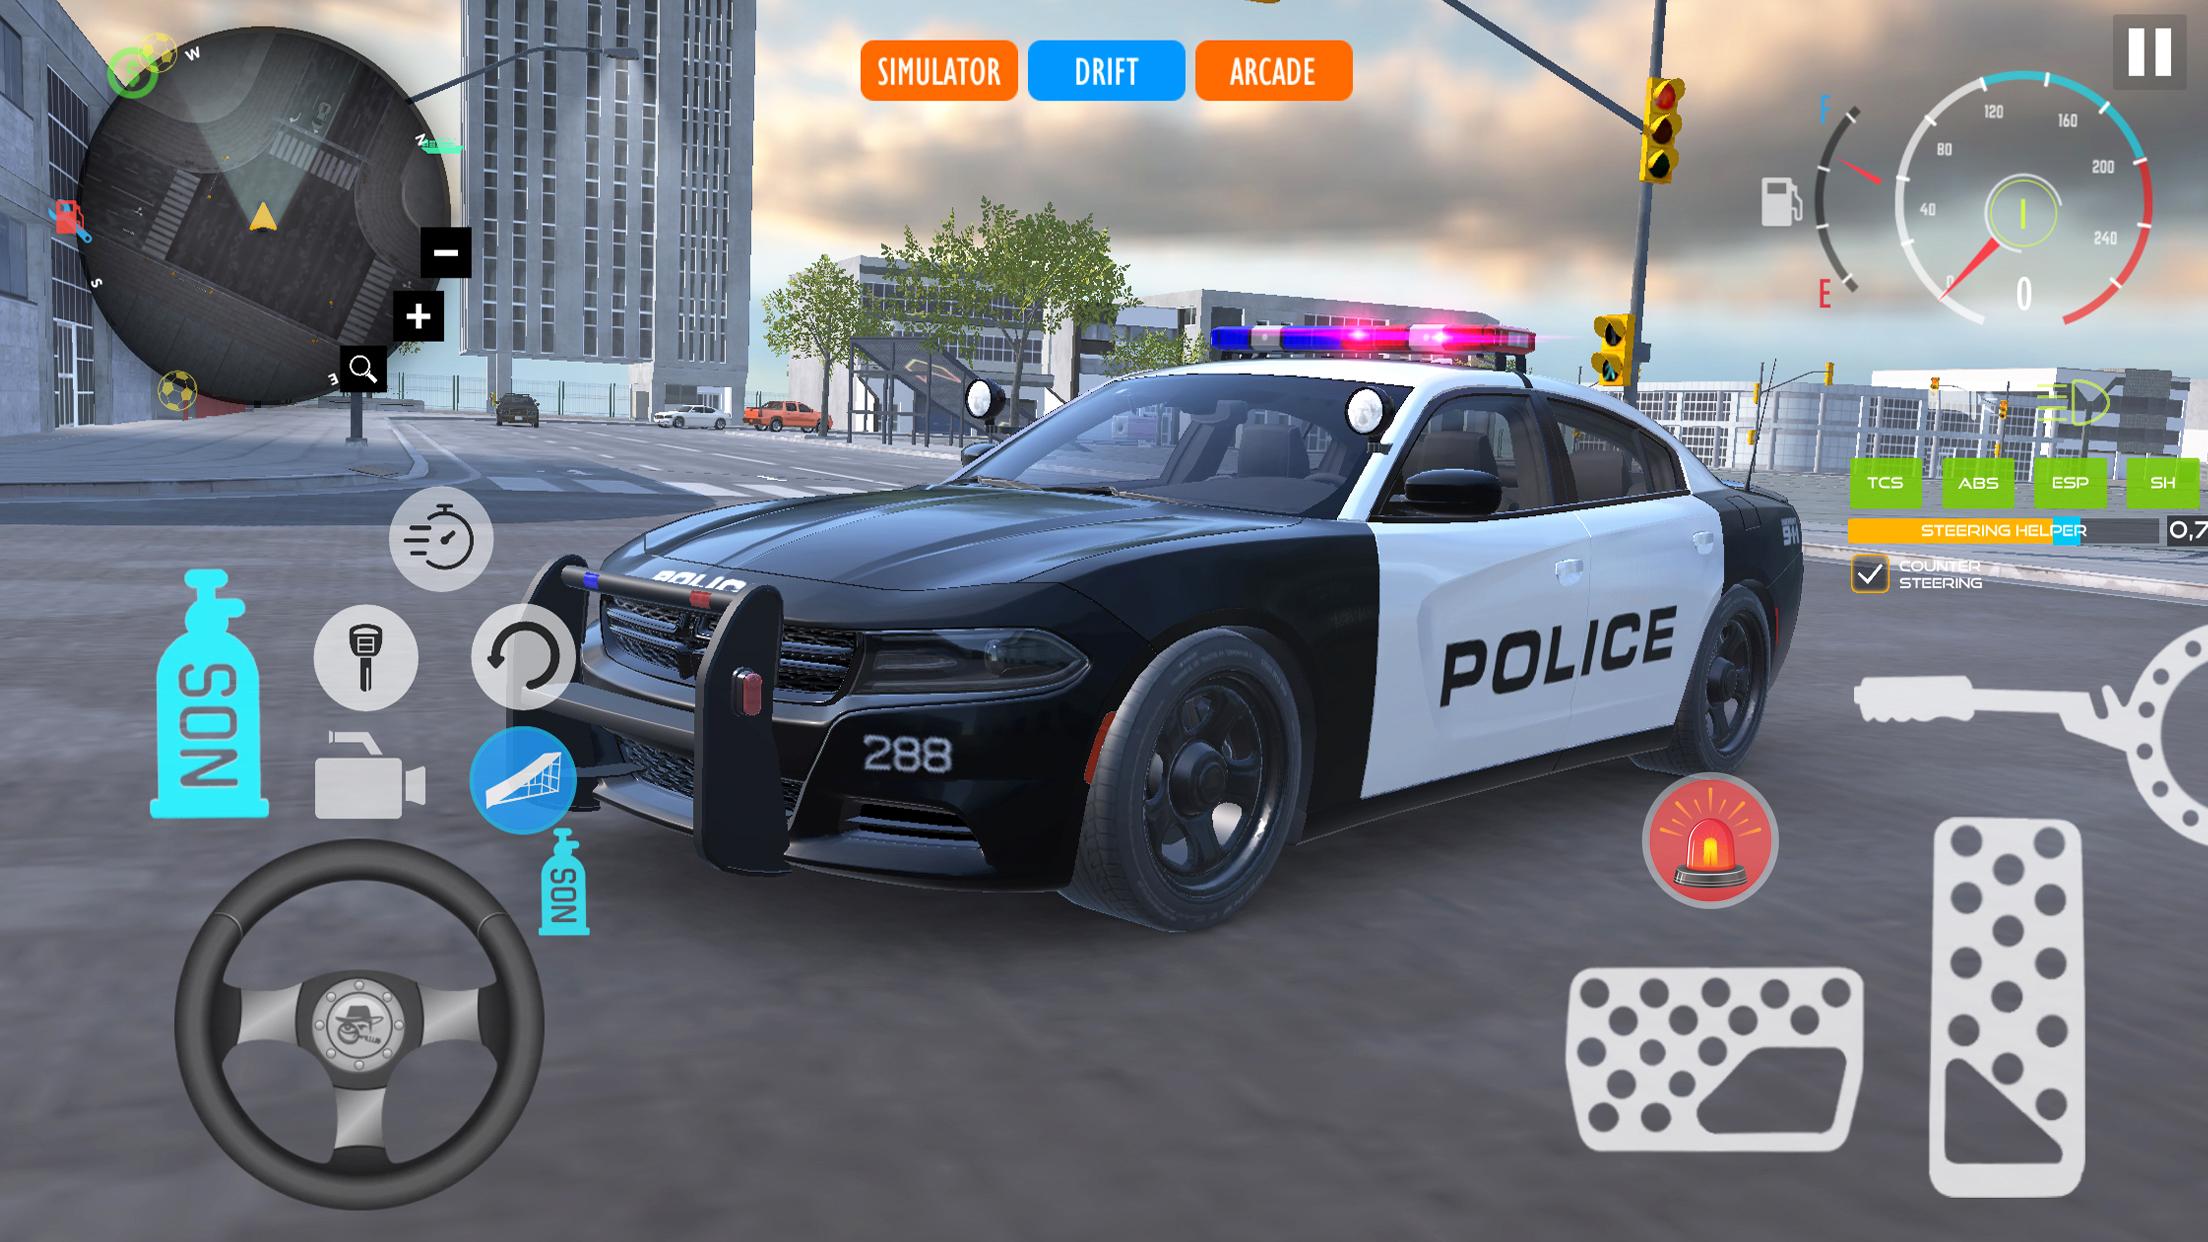 Игра побег от полиции на машине дрифт. Rod Multiplayer car Driving. Impossible car Stunts Driving - Sport car Racing Simulator 2021 - Android Gameplay. Drive car multiplayer